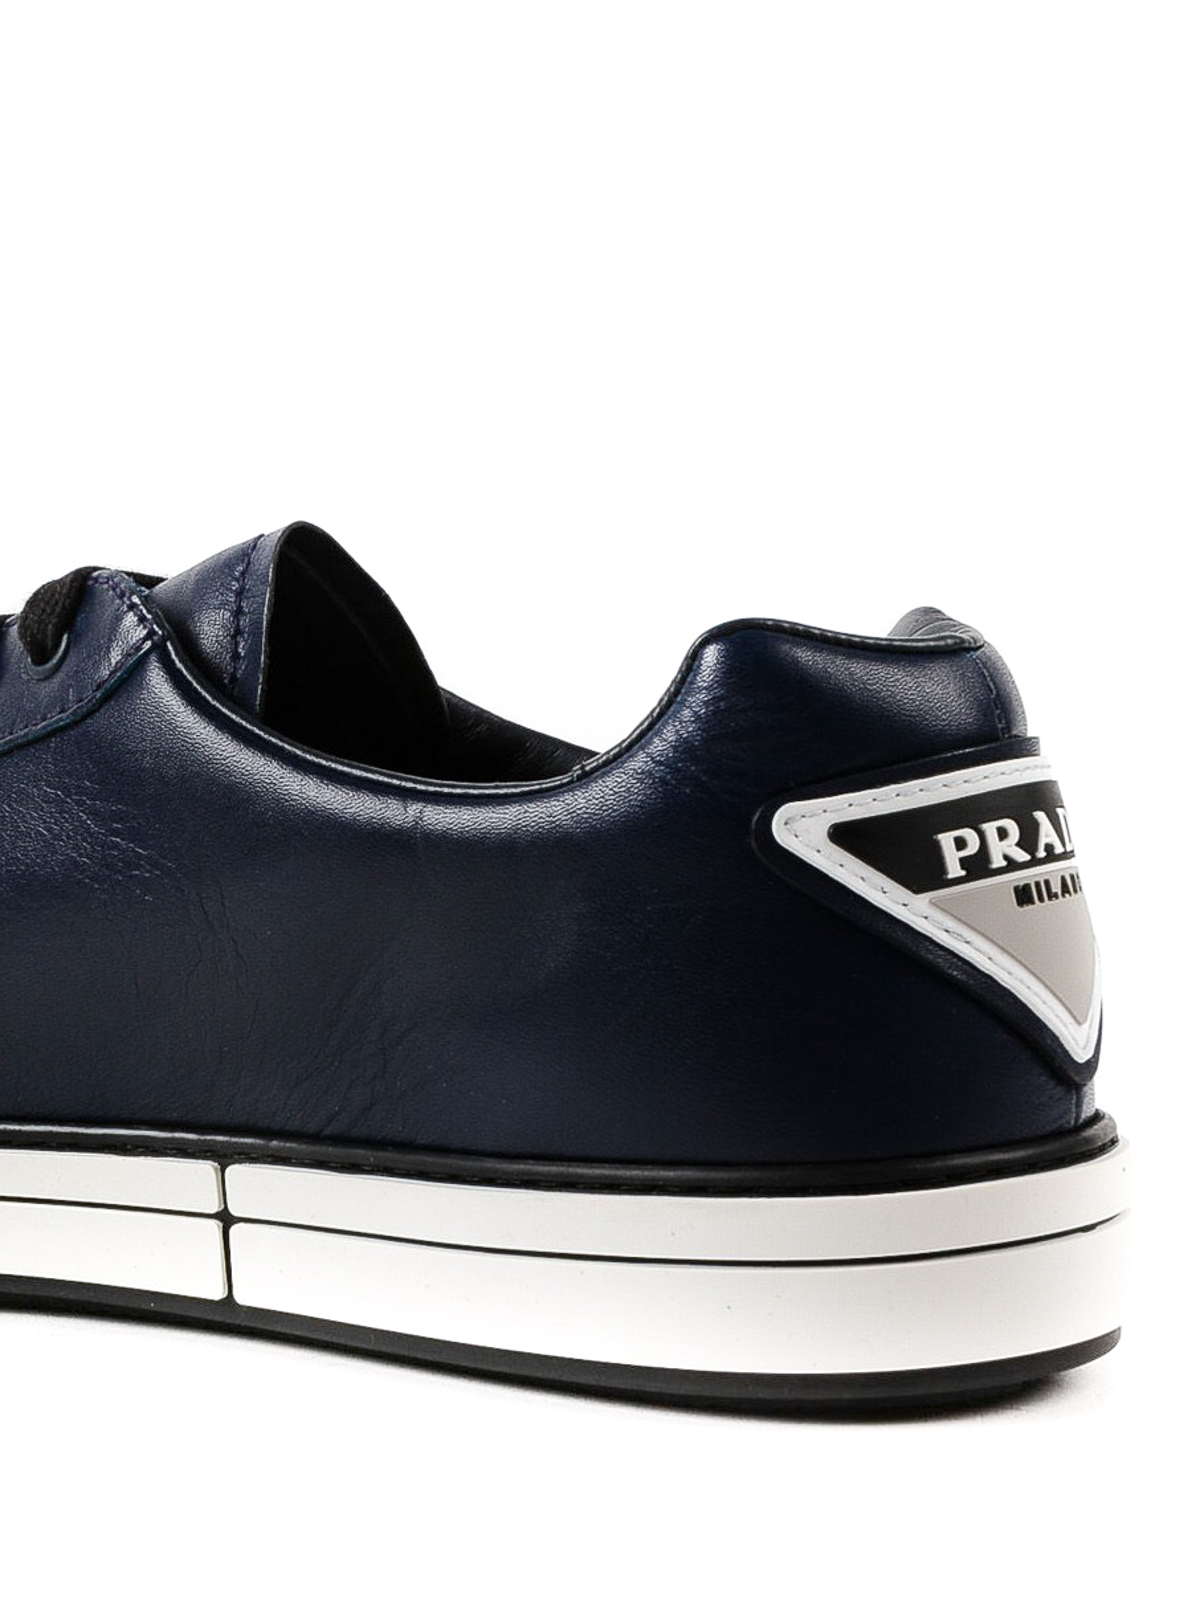 Trainers Prada - Dark blue leather logo sneakers - 4E33146DT216